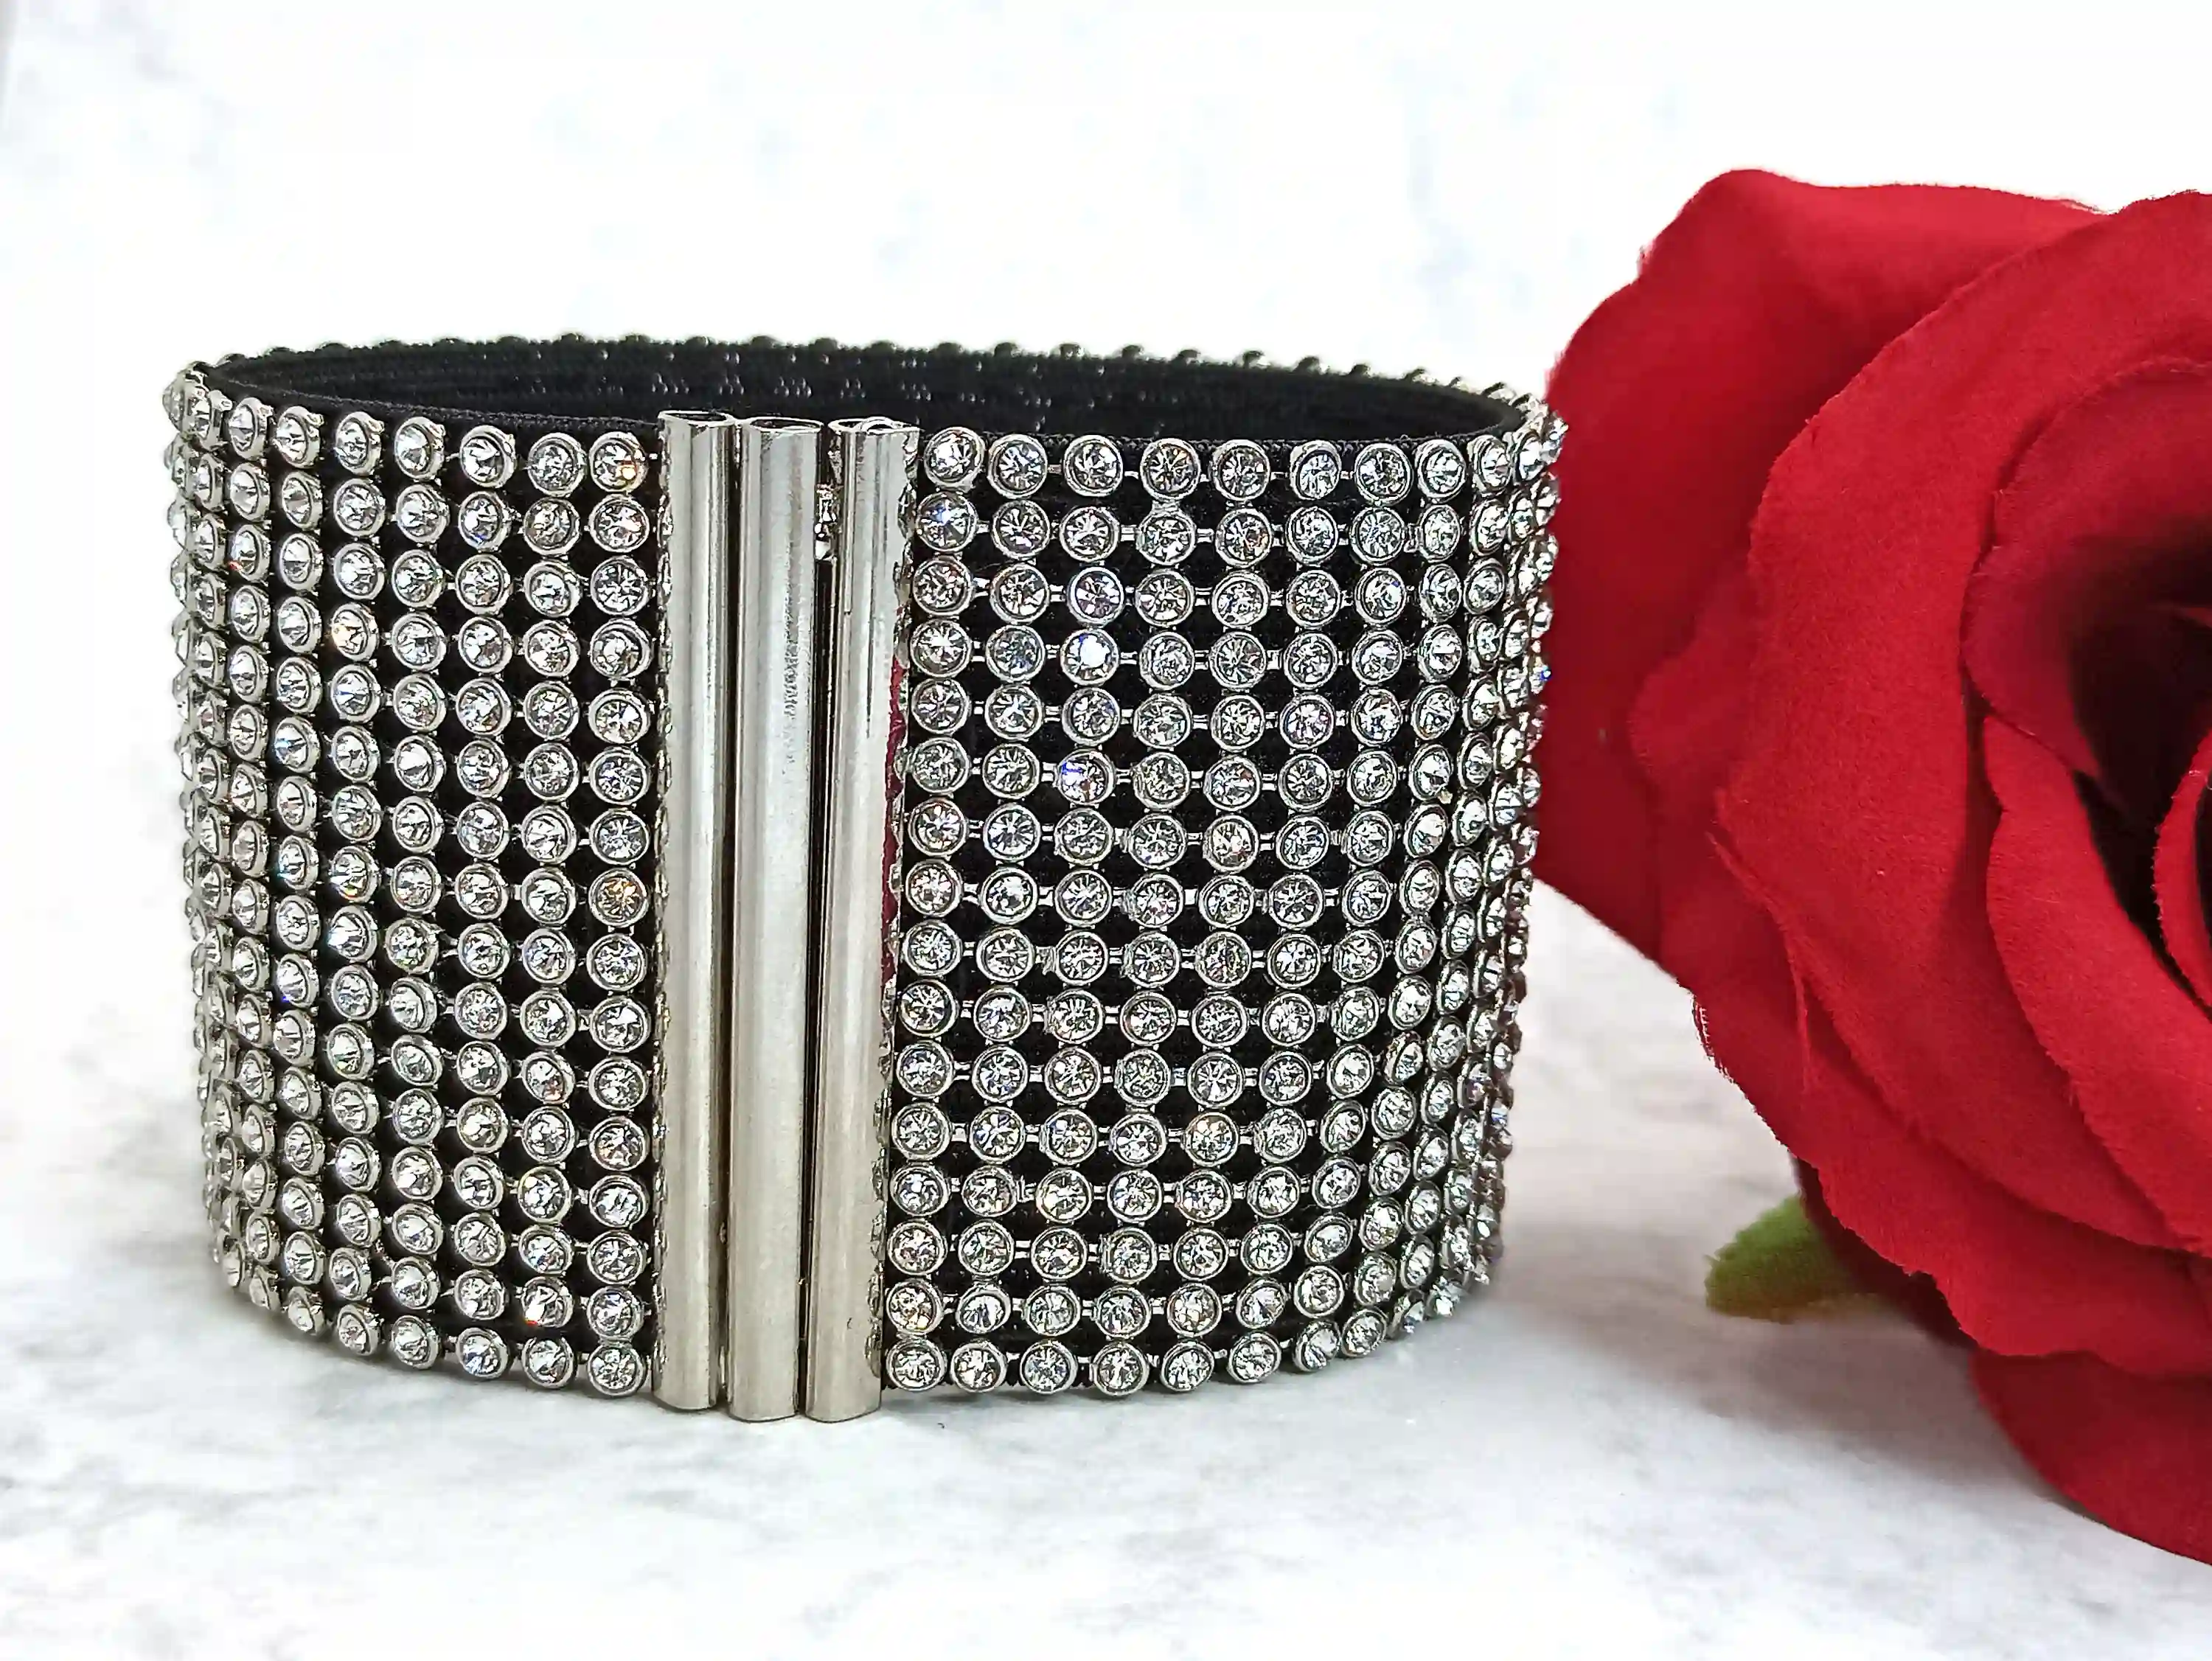 Limited Edition Bracelets - Crystal Bridal Bracelet - Wide Cuff Bracelet - Bridal Wedding Jewelry Gift for Bride - VINTAGE Jewelry - 4.5 ct 